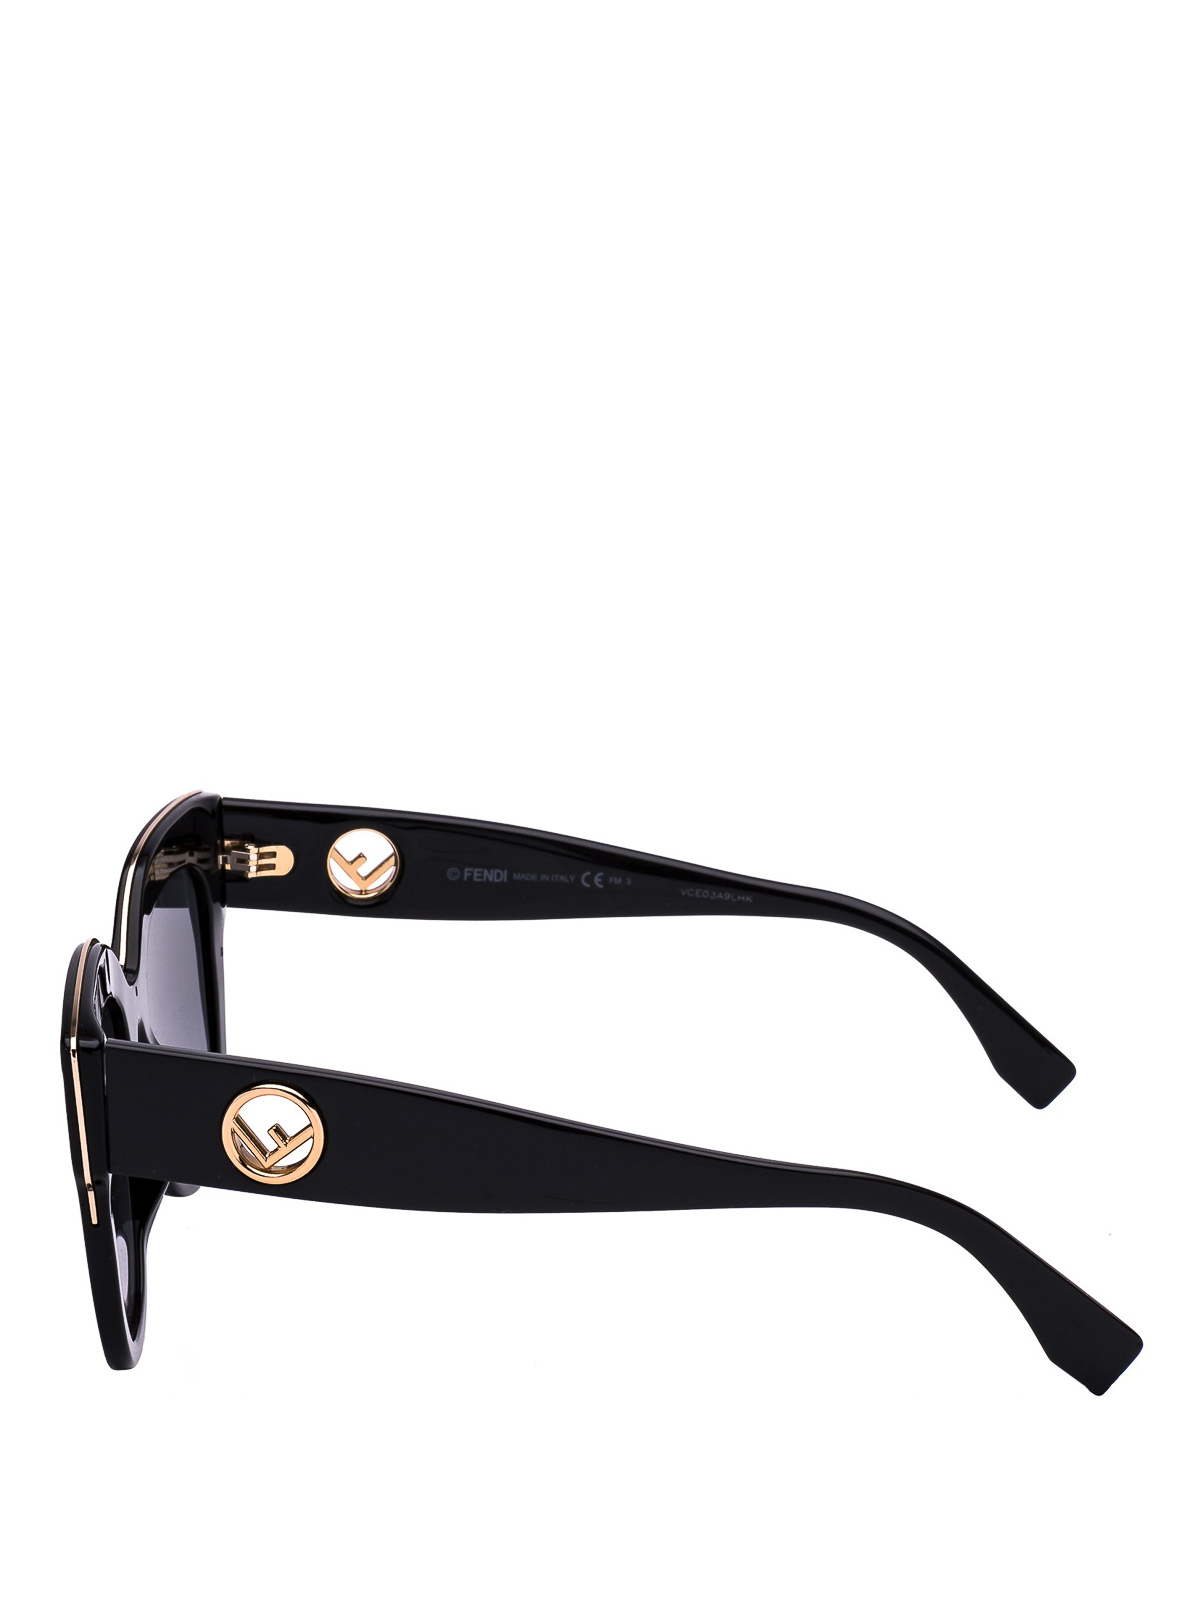 fendi sunglasses online